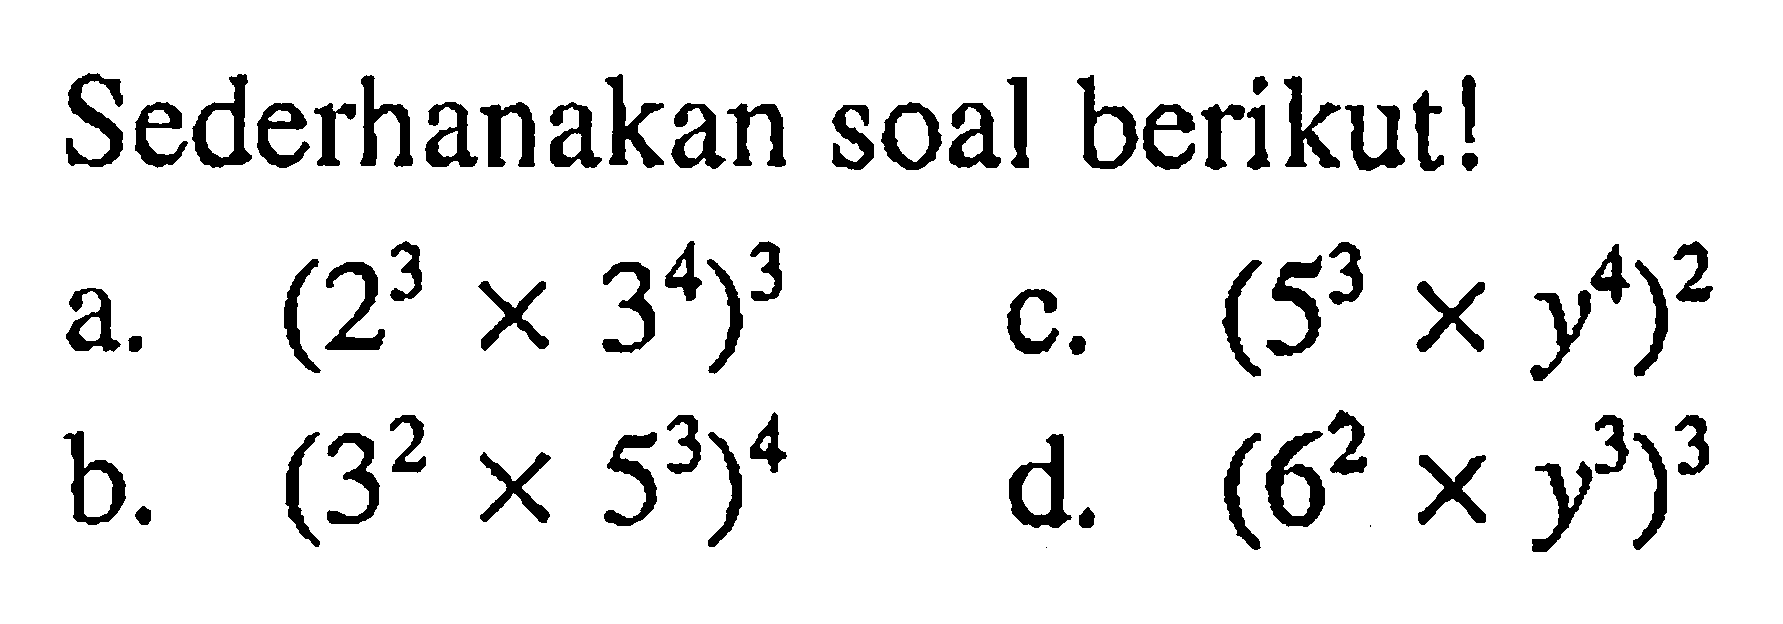 Sederhanakan soal berikut! a. (2^3 x 3^4)^3 b. (3^2 x 5^3)^4 c. (5^3 x y^4)^2 d. (6^2 x y^3)^3